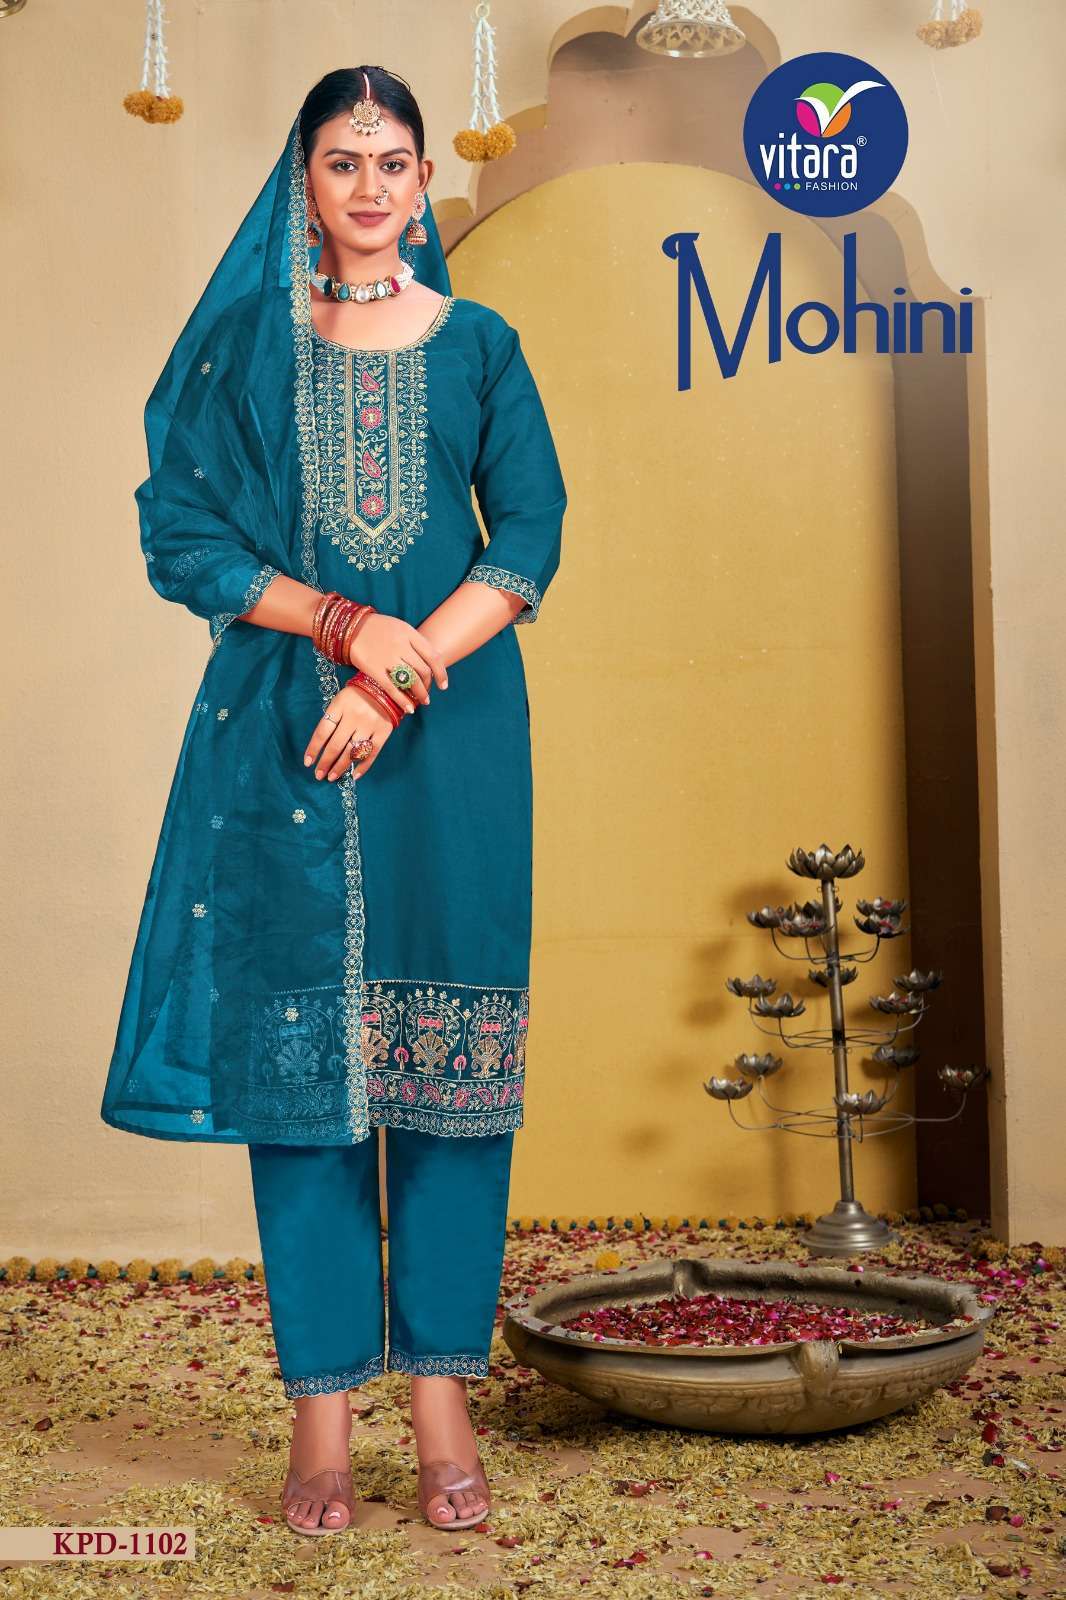 Vitara fashion Mohini vol -2 branded kurti manufacturer in surat 